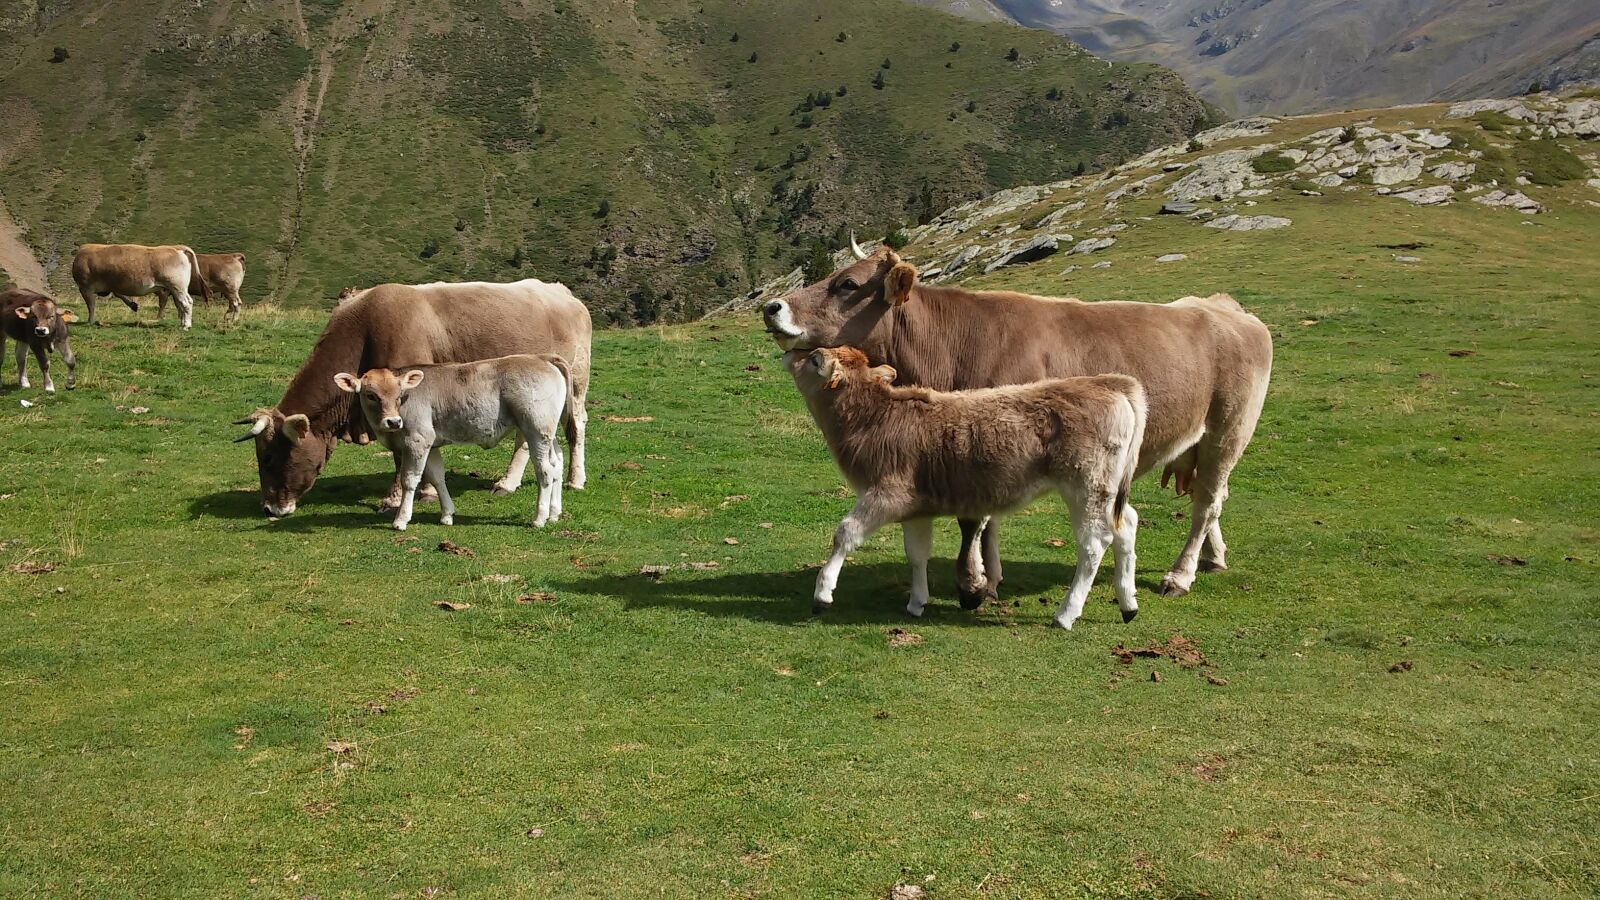 LG G2 MINI sample photo. Cows, mountain, nature photography